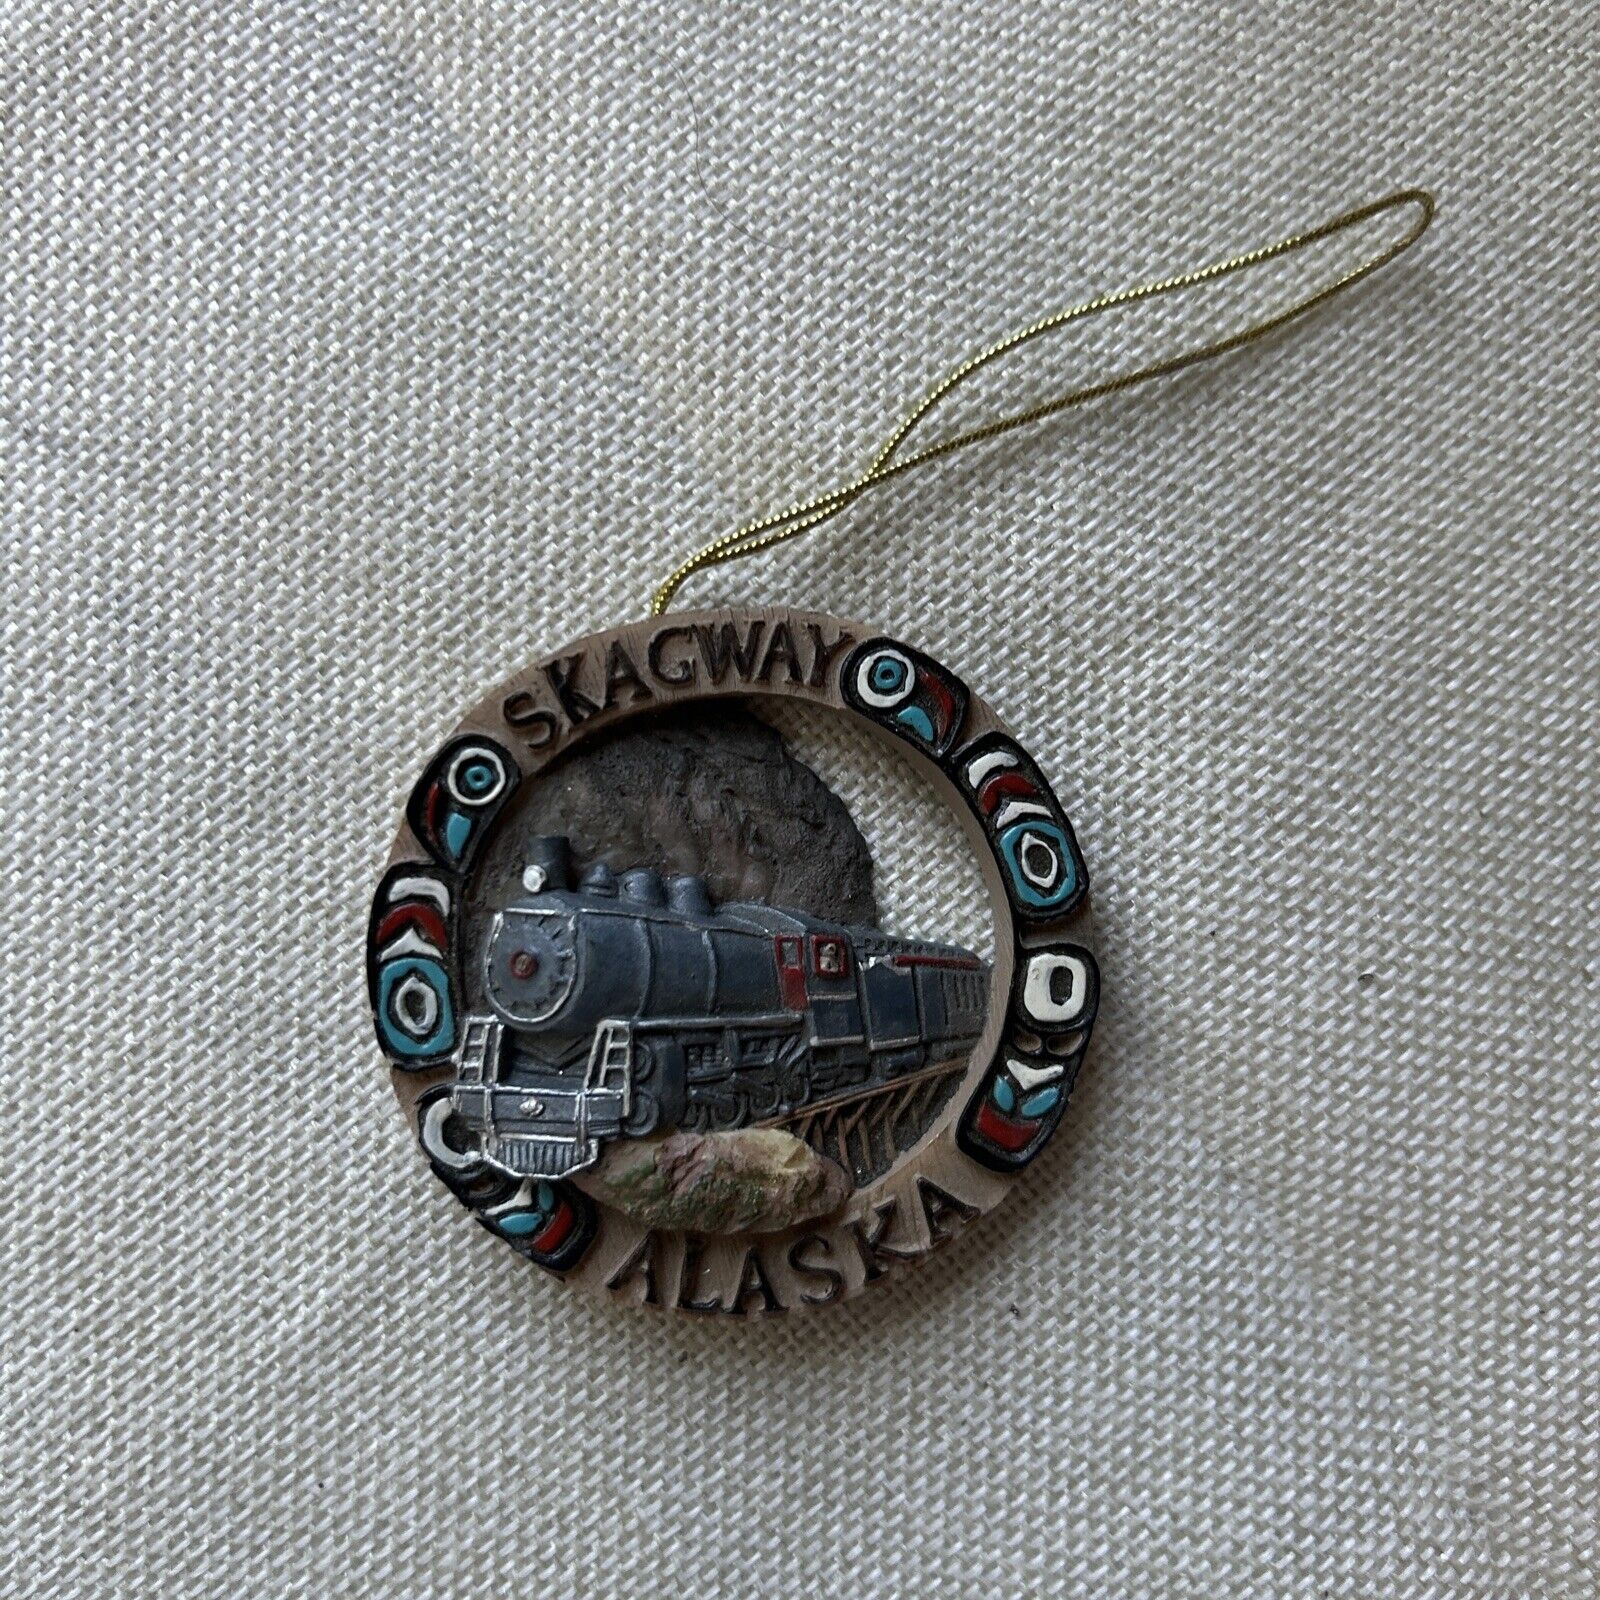 Vintage Skagway Alaska Ornament ￼